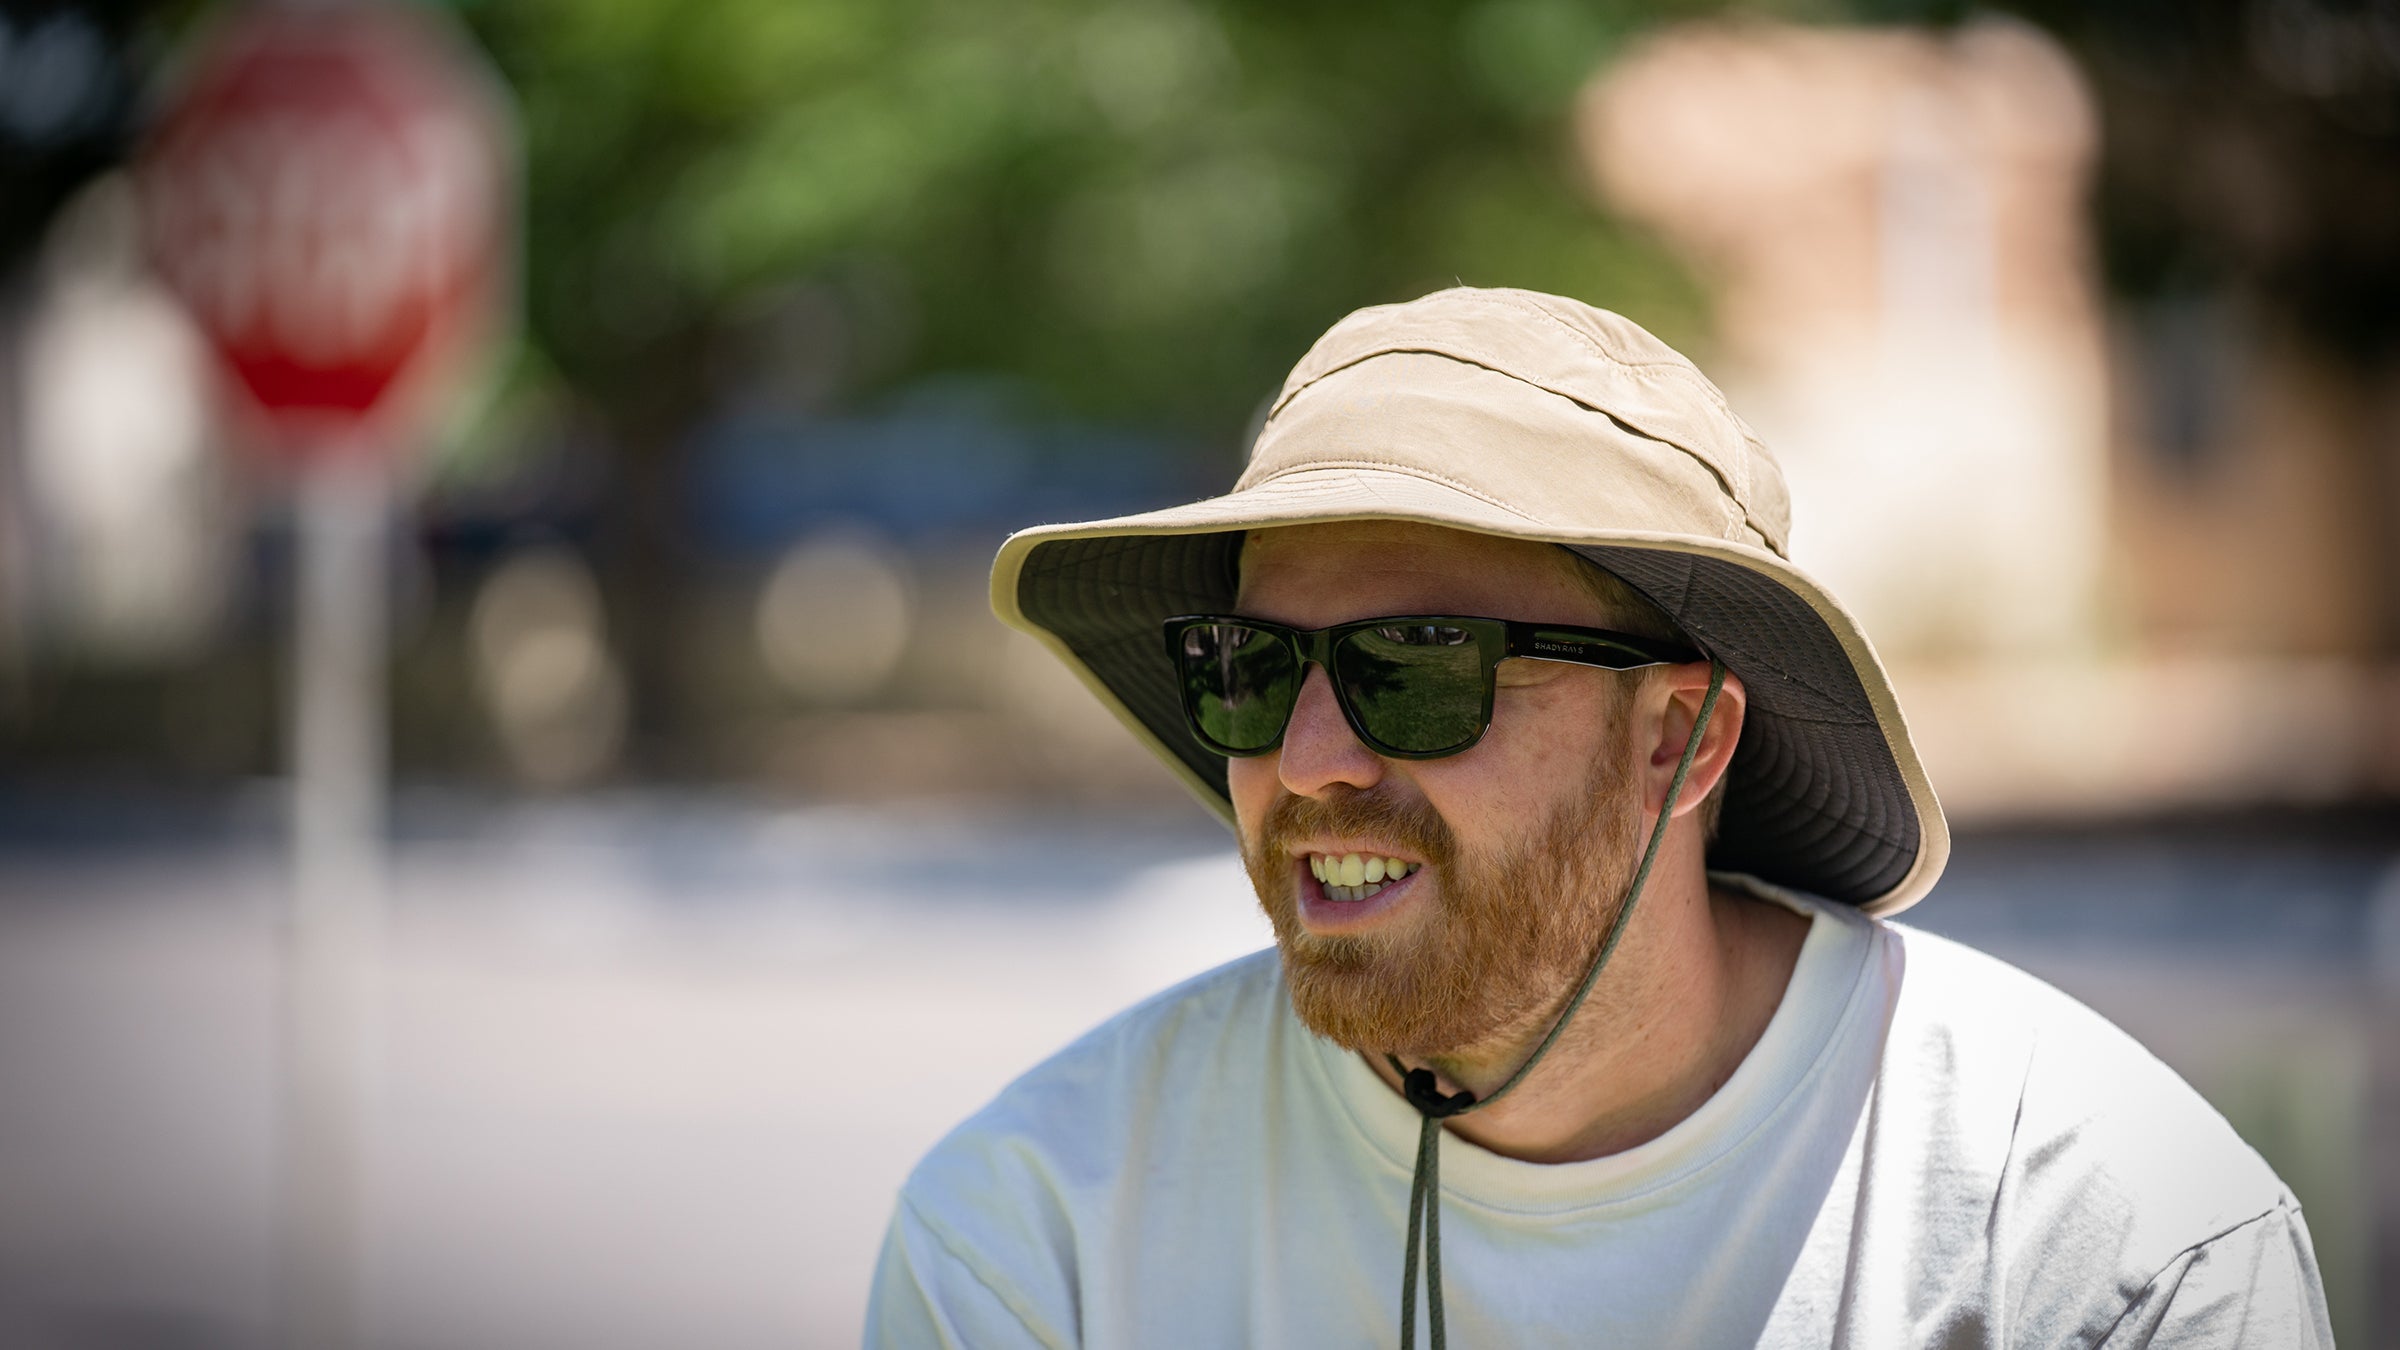 Apparel Mens Straw Beach Hats, Straw Fishing Sunscreen Hat